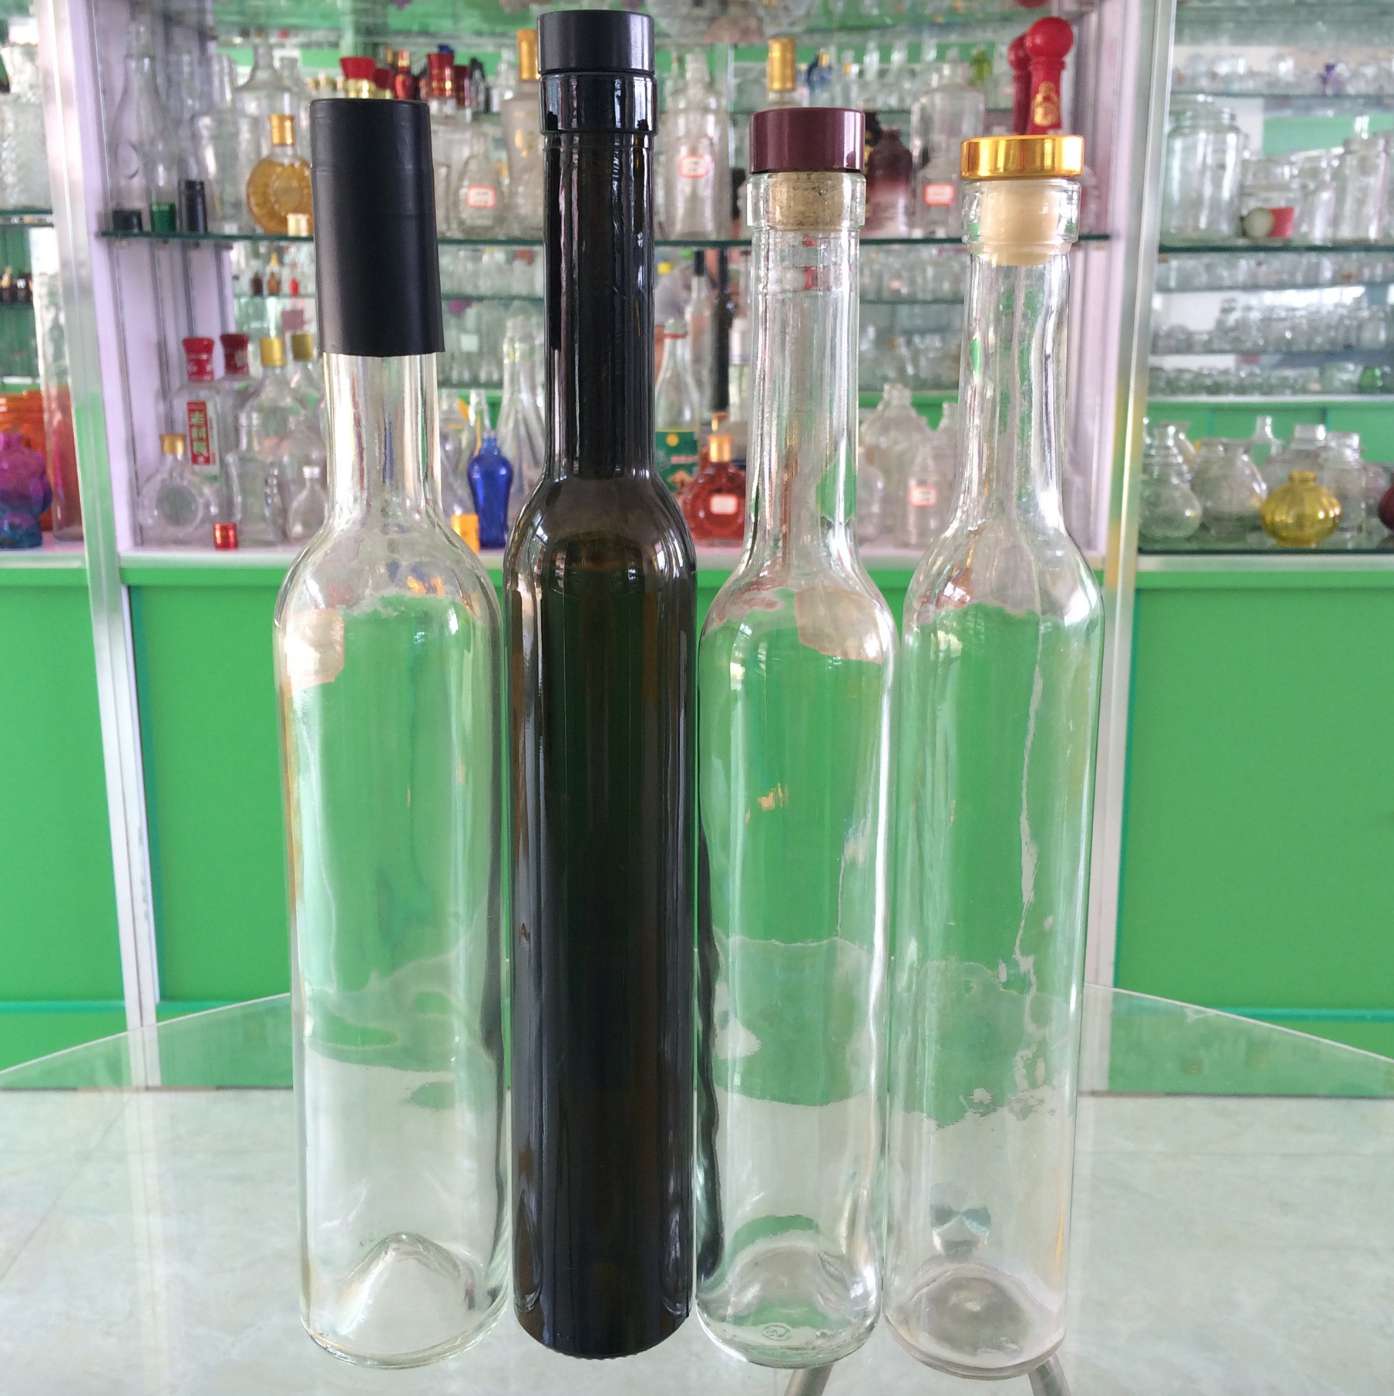 Bellissima Ice Wine Bottles 375ml